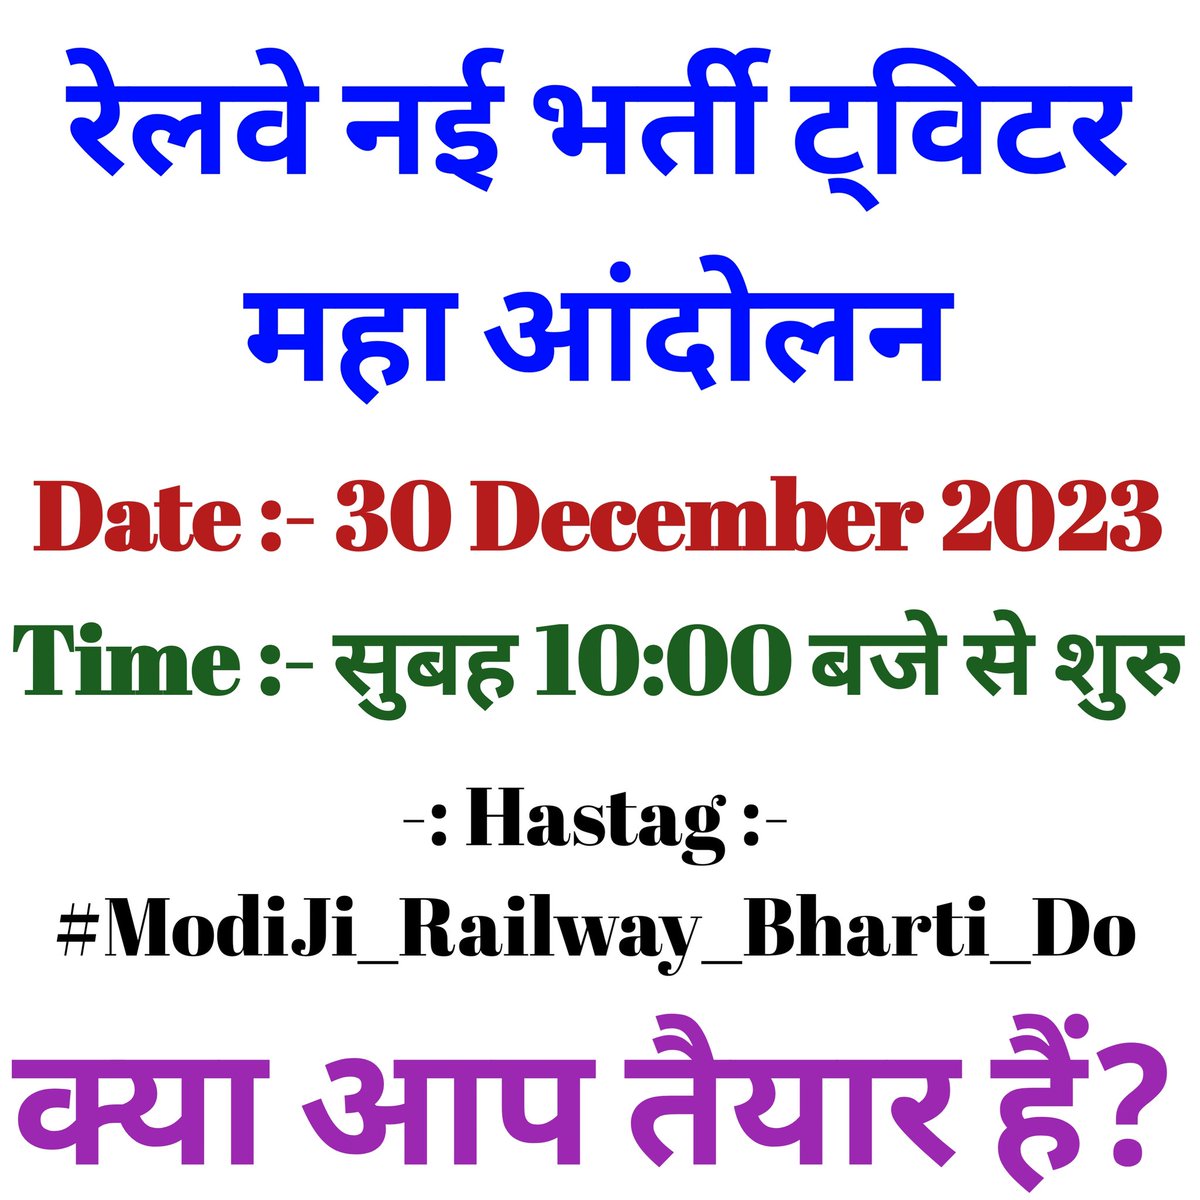 RAILWAY vacancy #Modiji_Railway_Bharti_Do
#Modiji_Railway_Bharti_Do